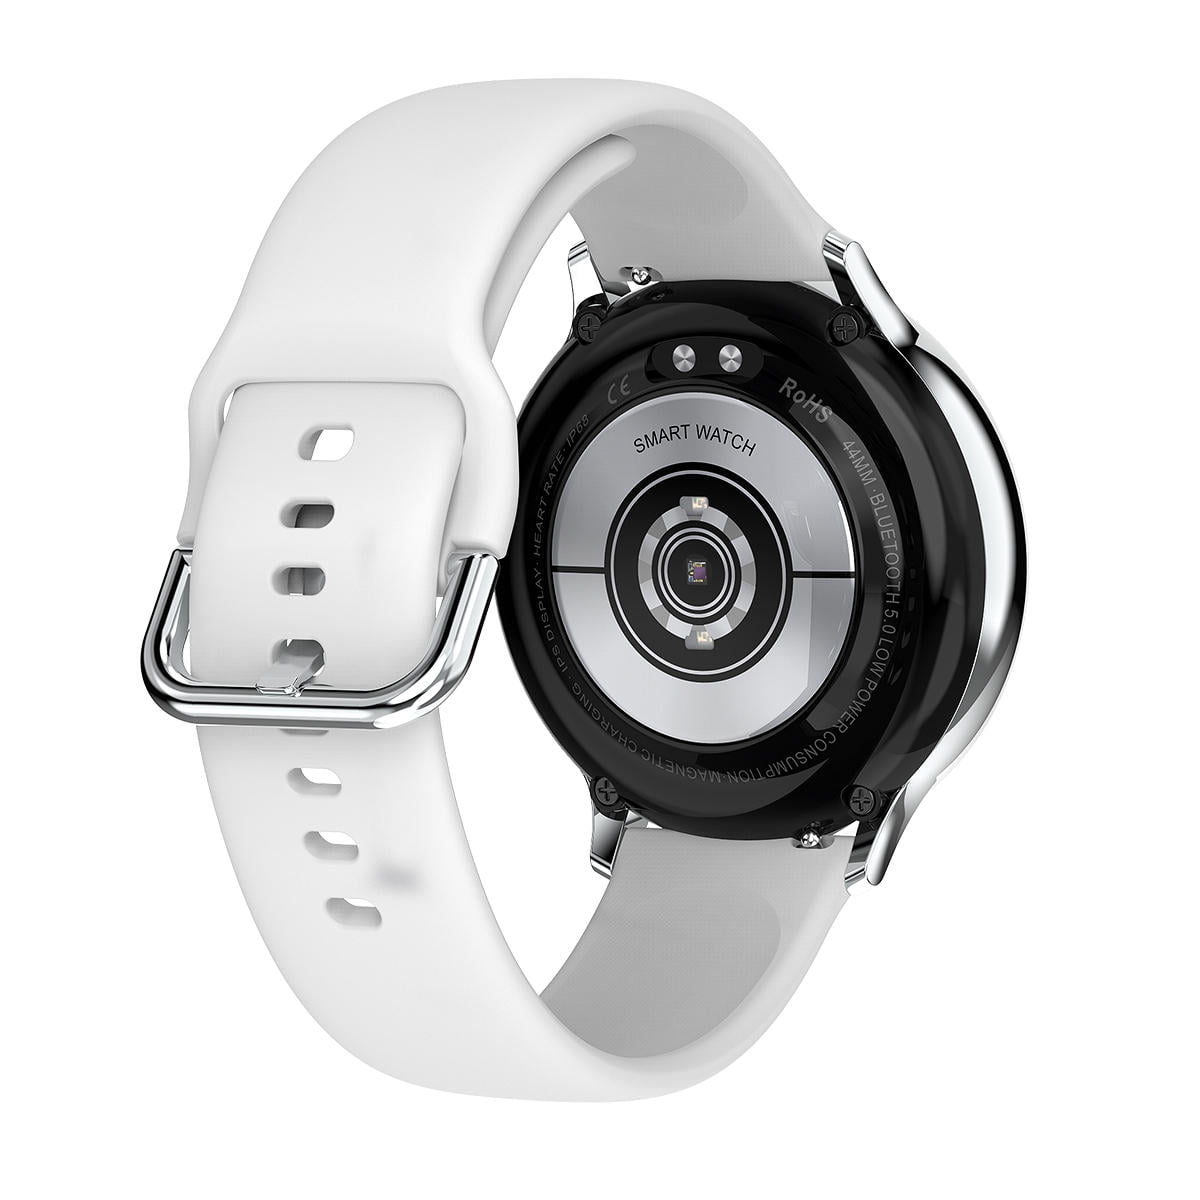 S20 smart watch ECG monitor smart watch heart rate monitor blood pressure (22)